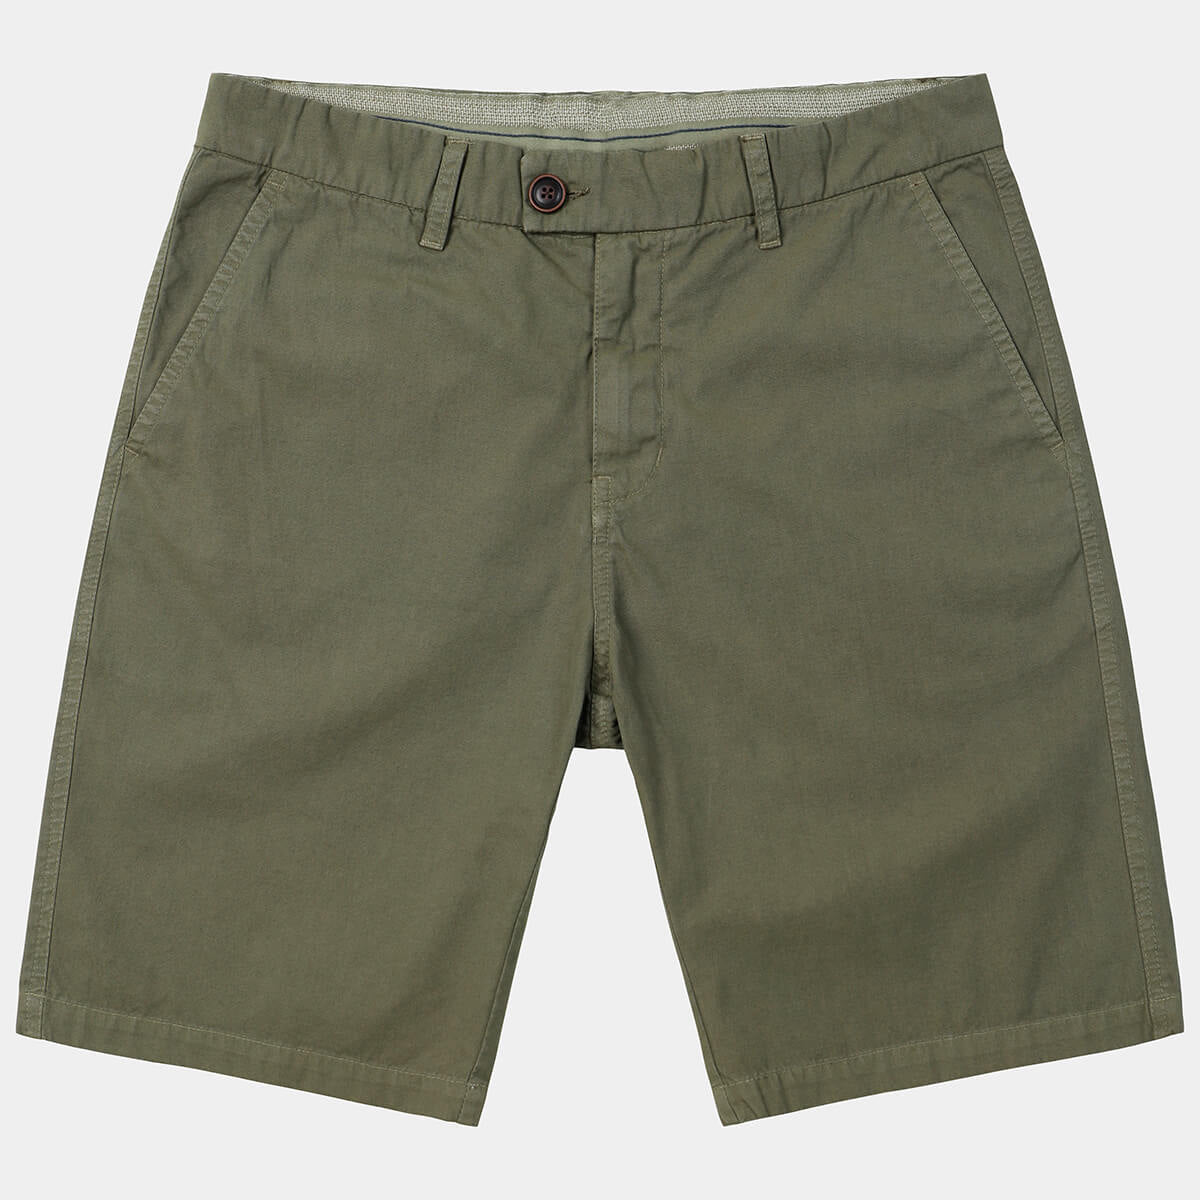 Men's Casual Summer Holiday Cotton Shorts